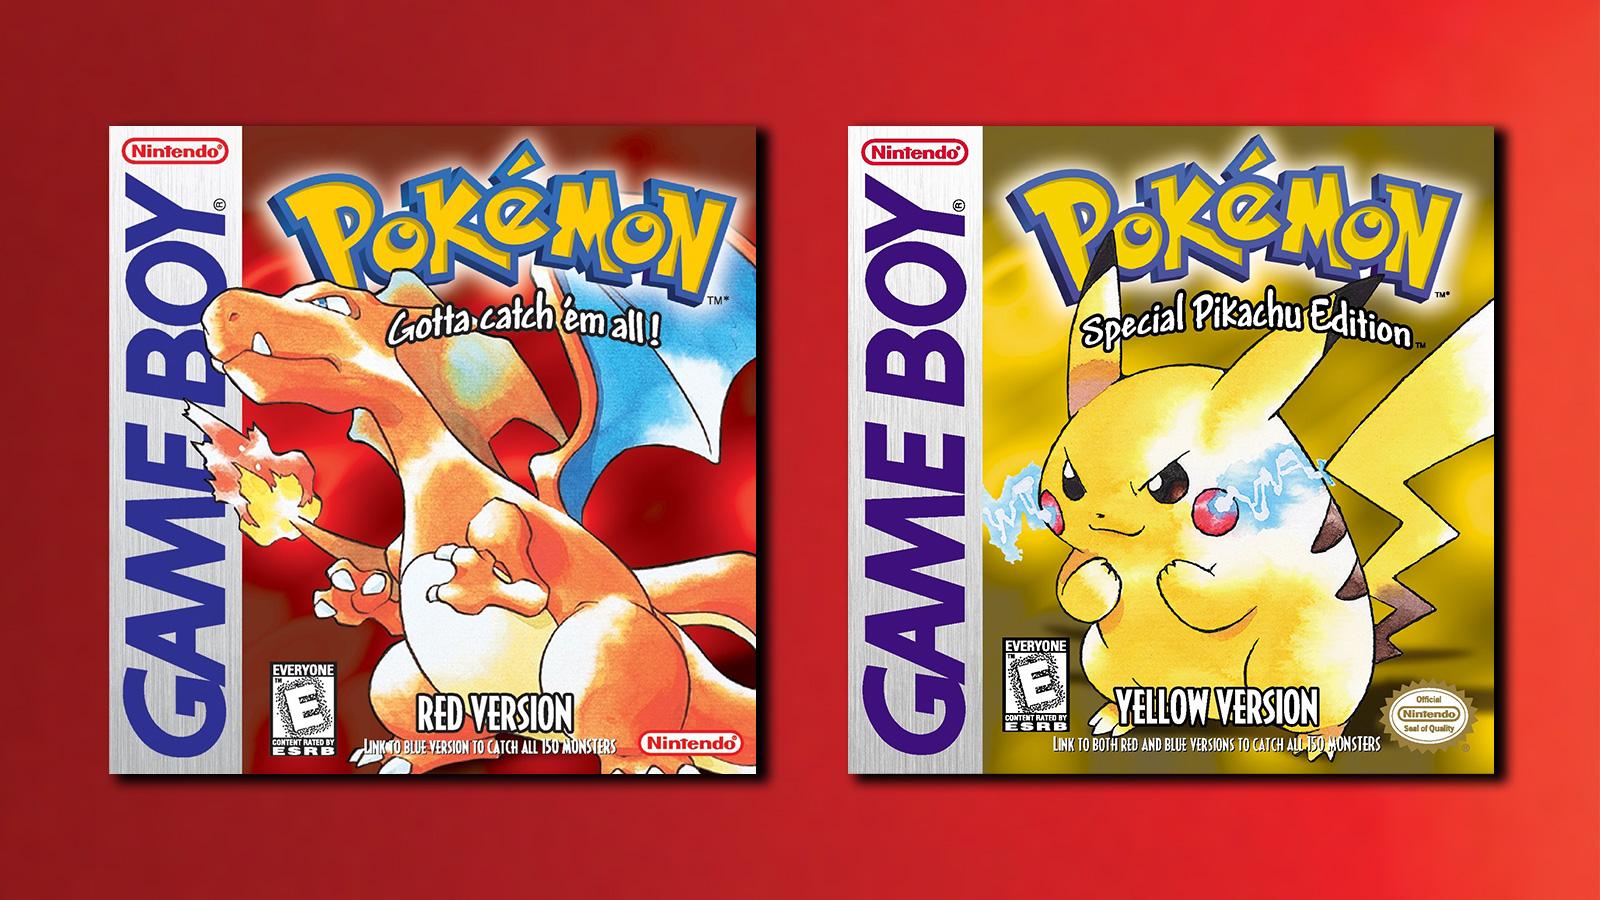 Screenshot of Pokemon Red & Yellow's Game Boy boxes.